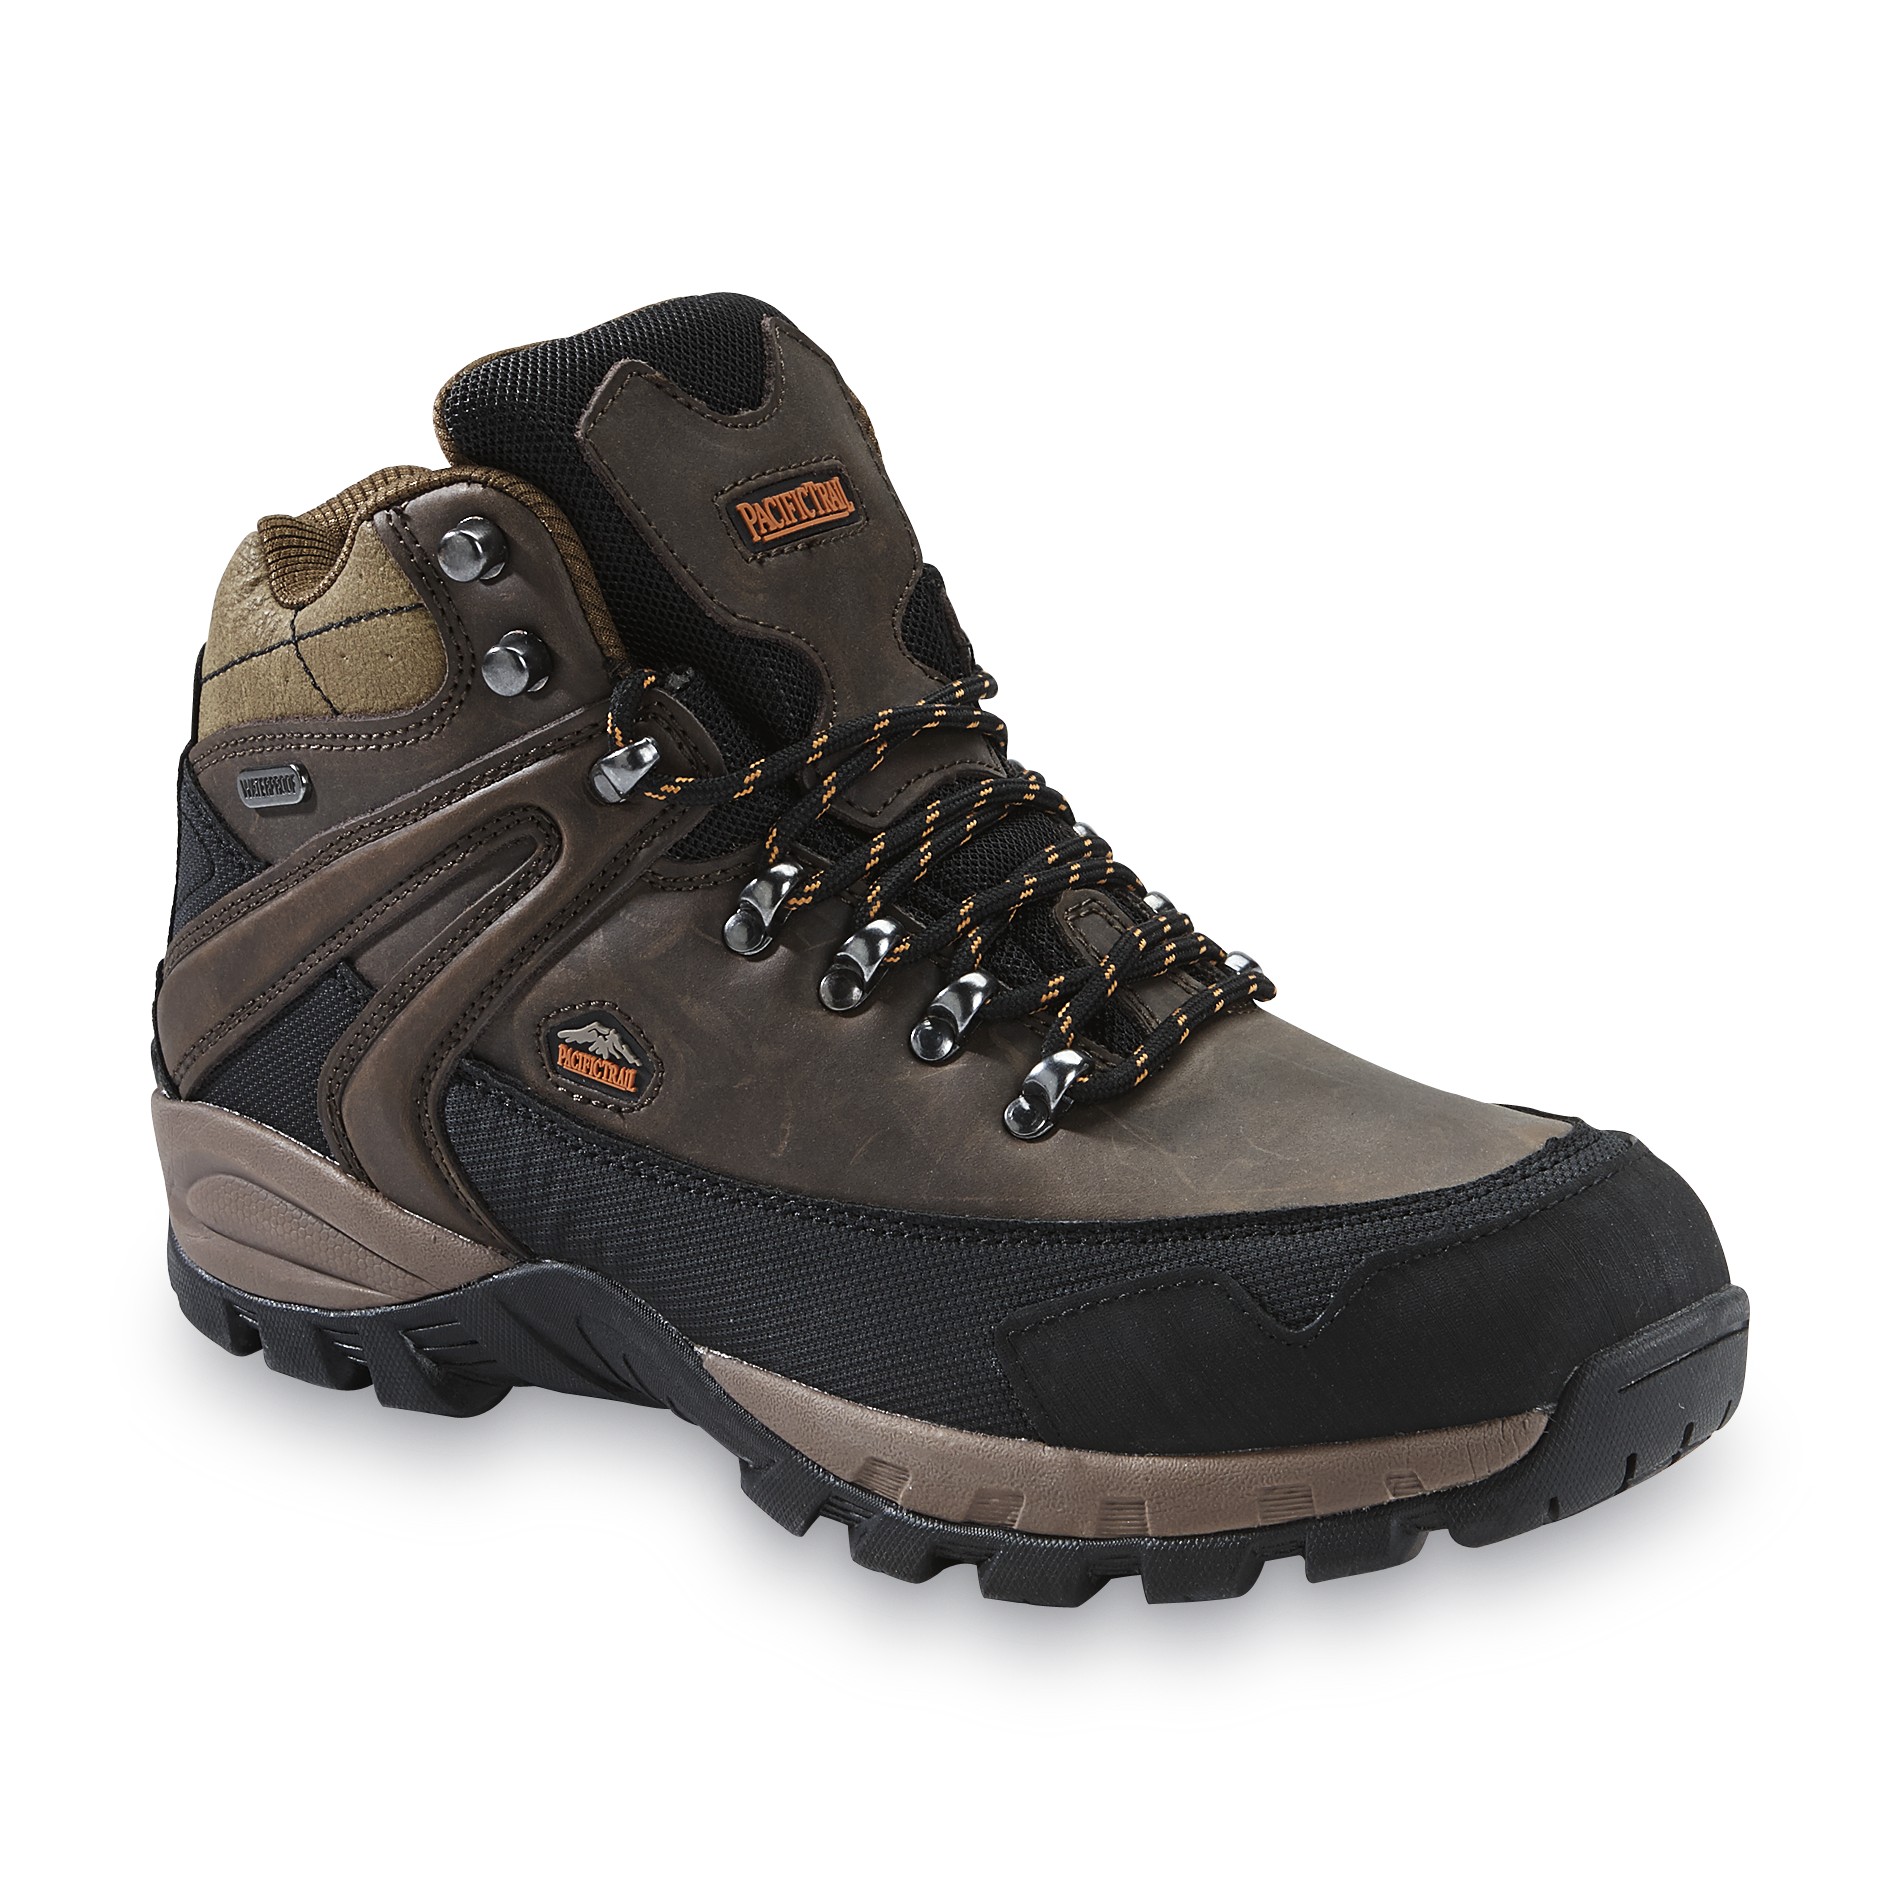 Pacific Trail Men's Rainier 6 Dark Brown Medium and Wide Waterproof Hiking Boot